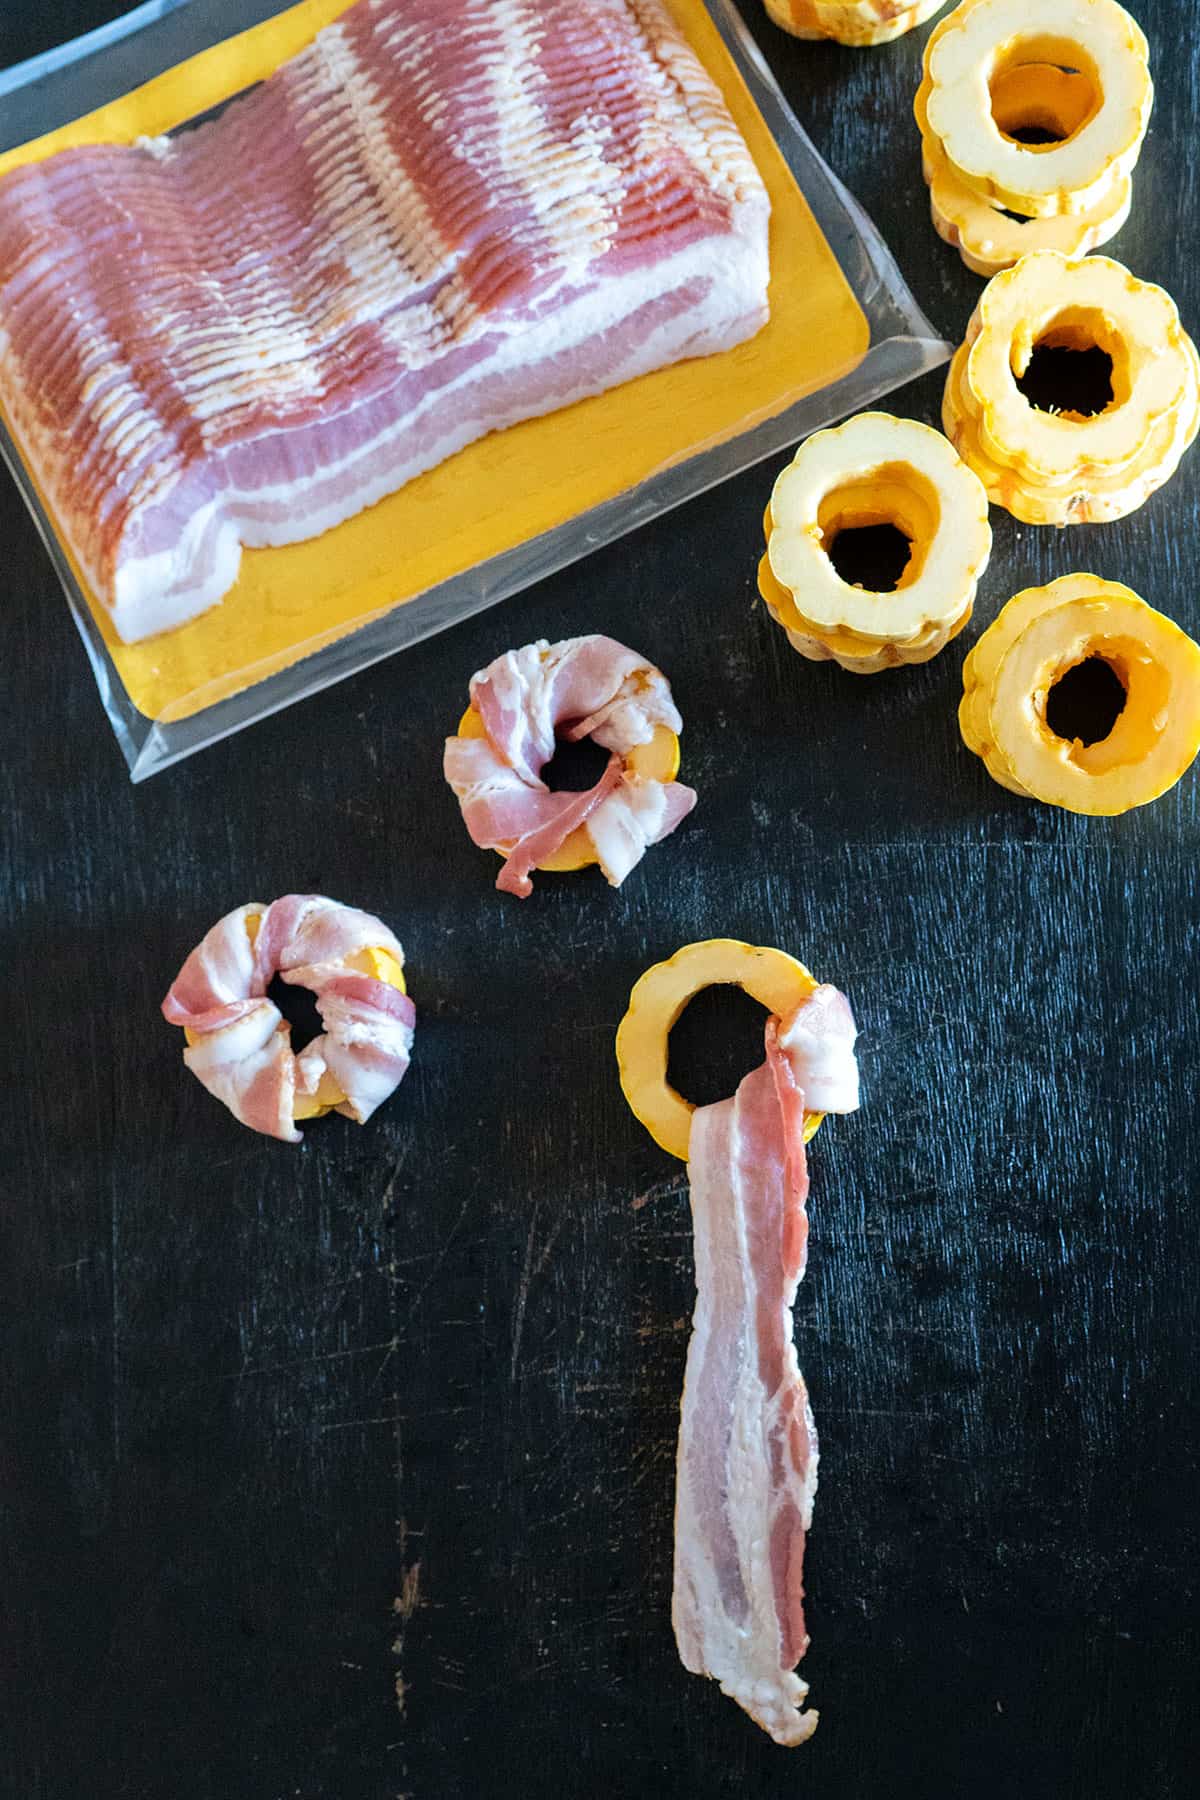 bacon strip pulled through center of delicata squash ring.